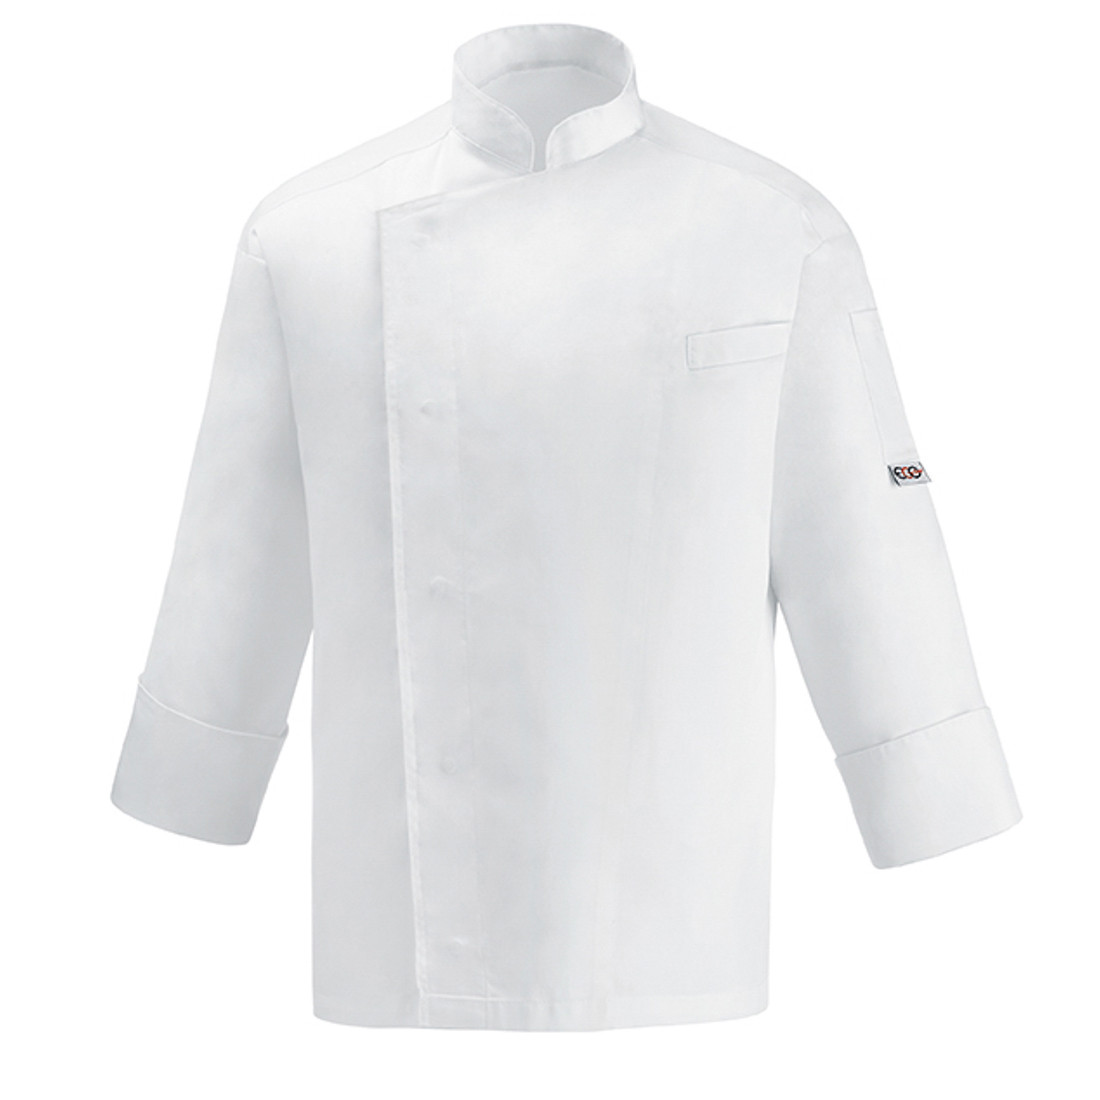 Holmes Chef's Jacket - Safetywear